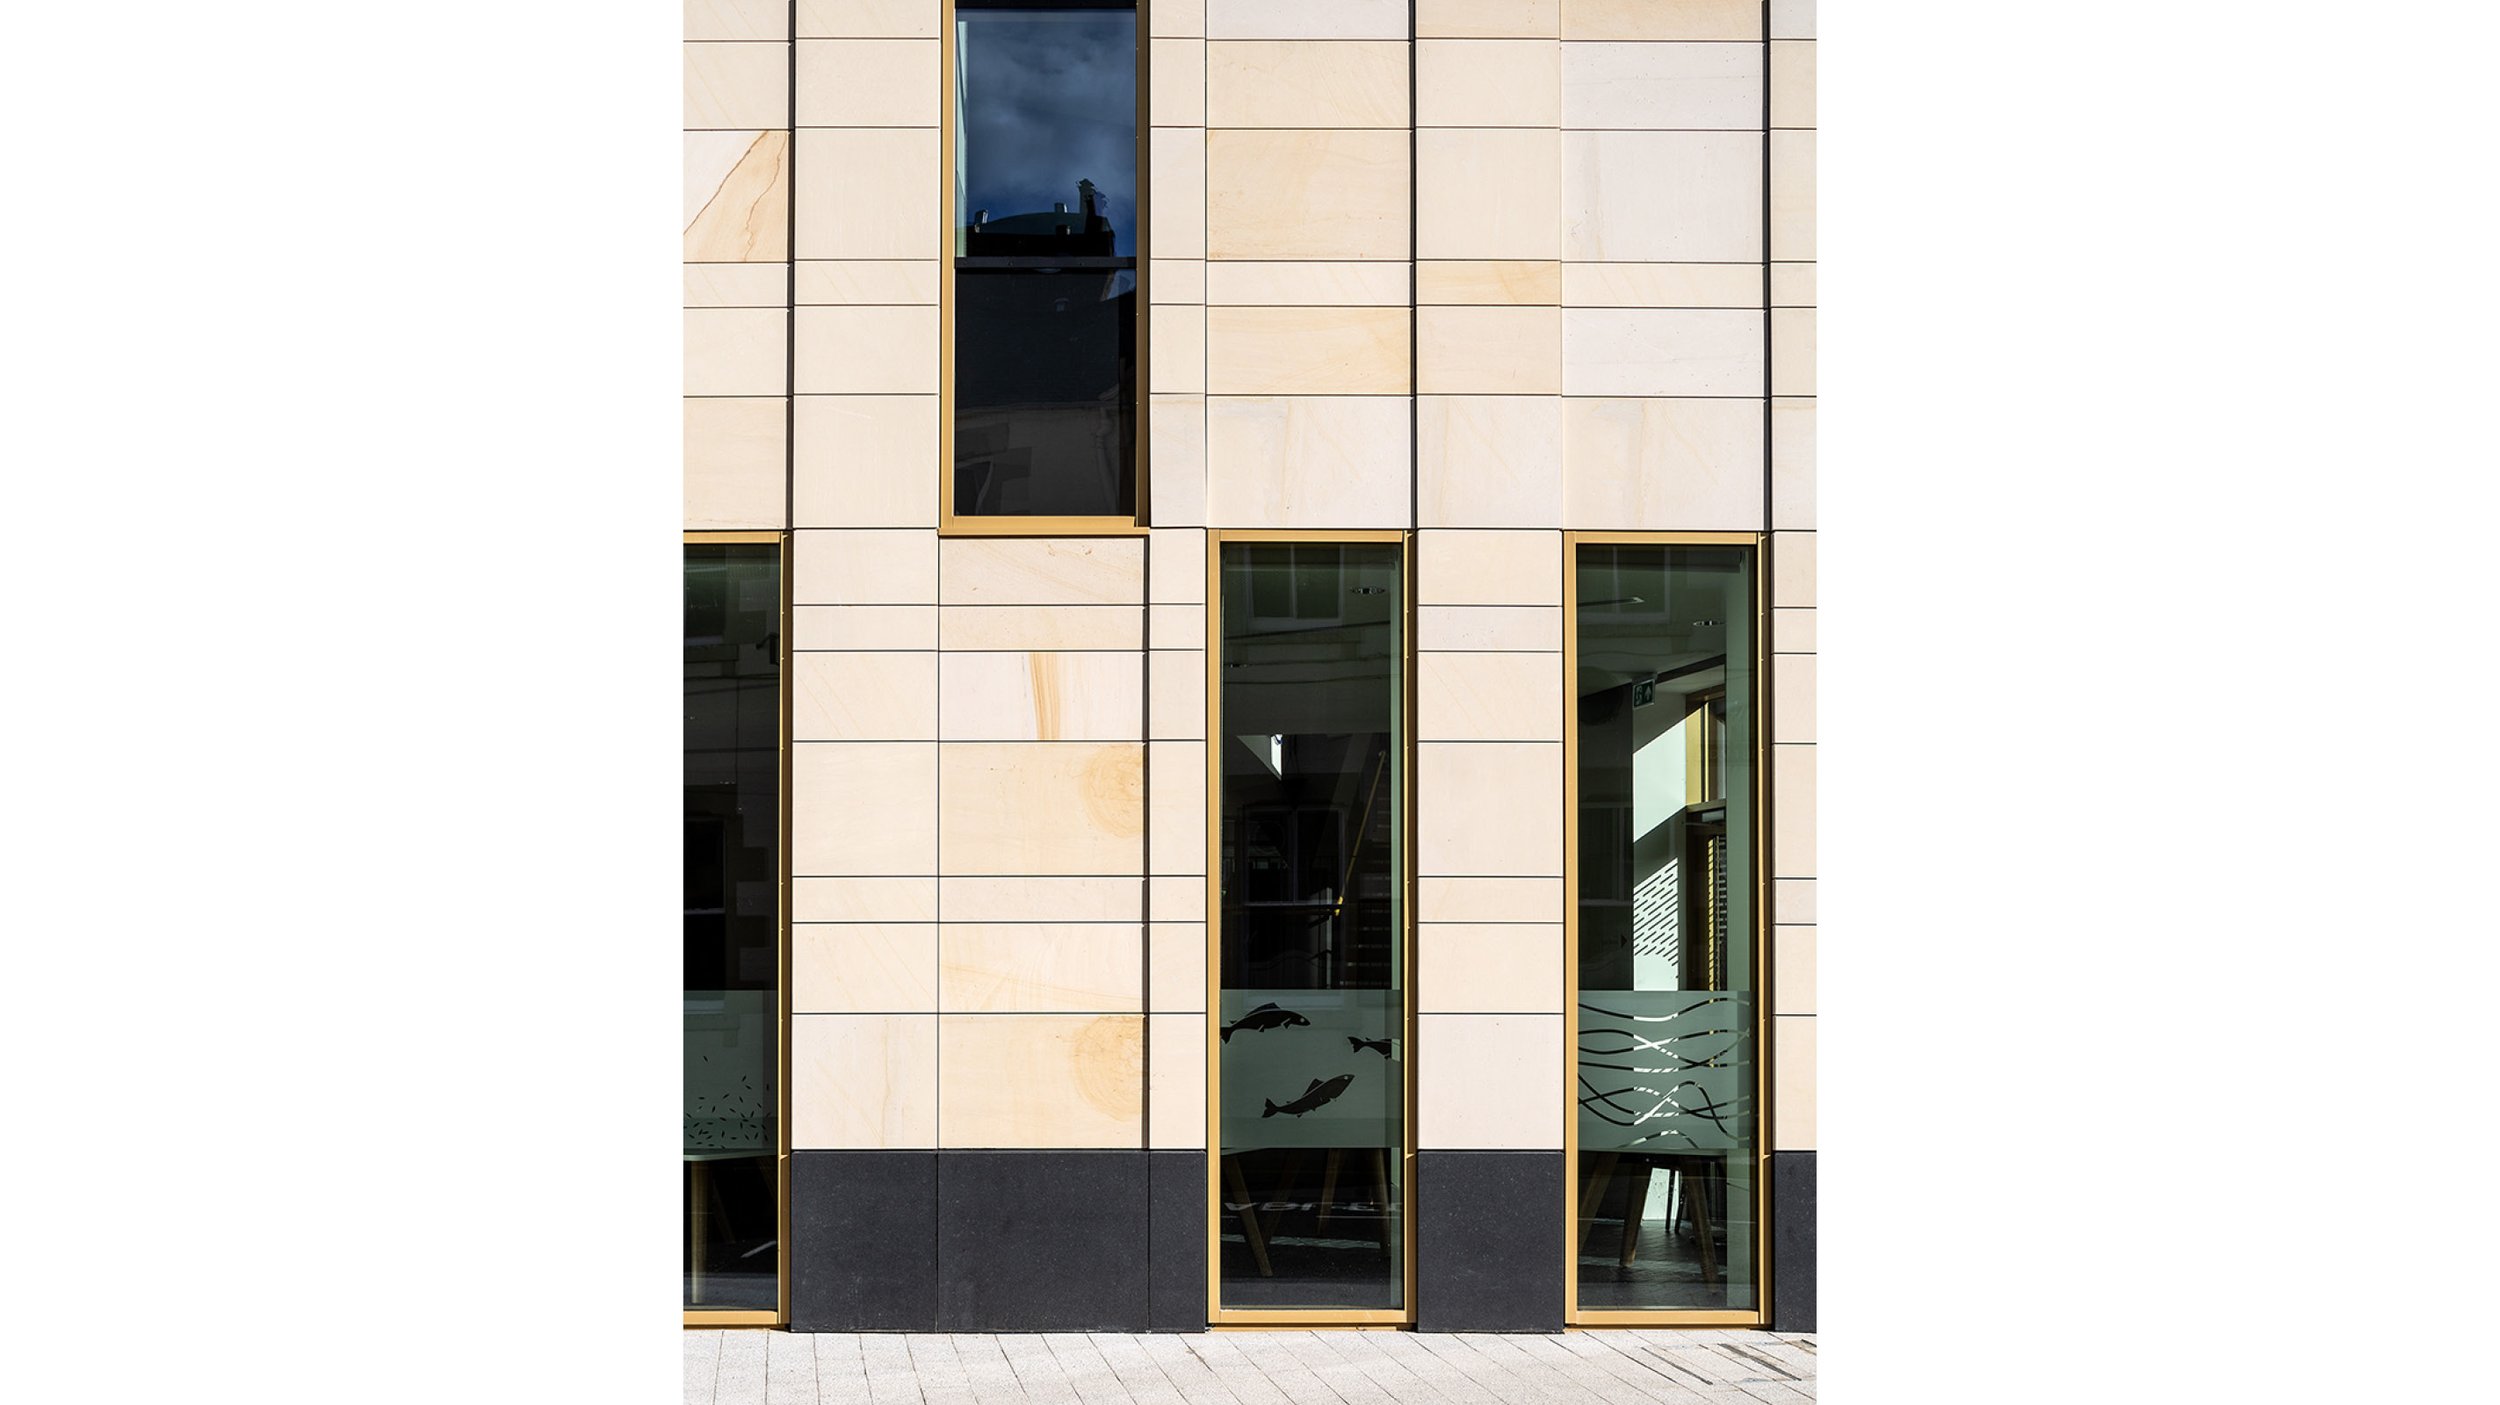 eaa-edinburgh-architectural-association-scotland-uk-awards-2022-winners-large-project-6.jpg